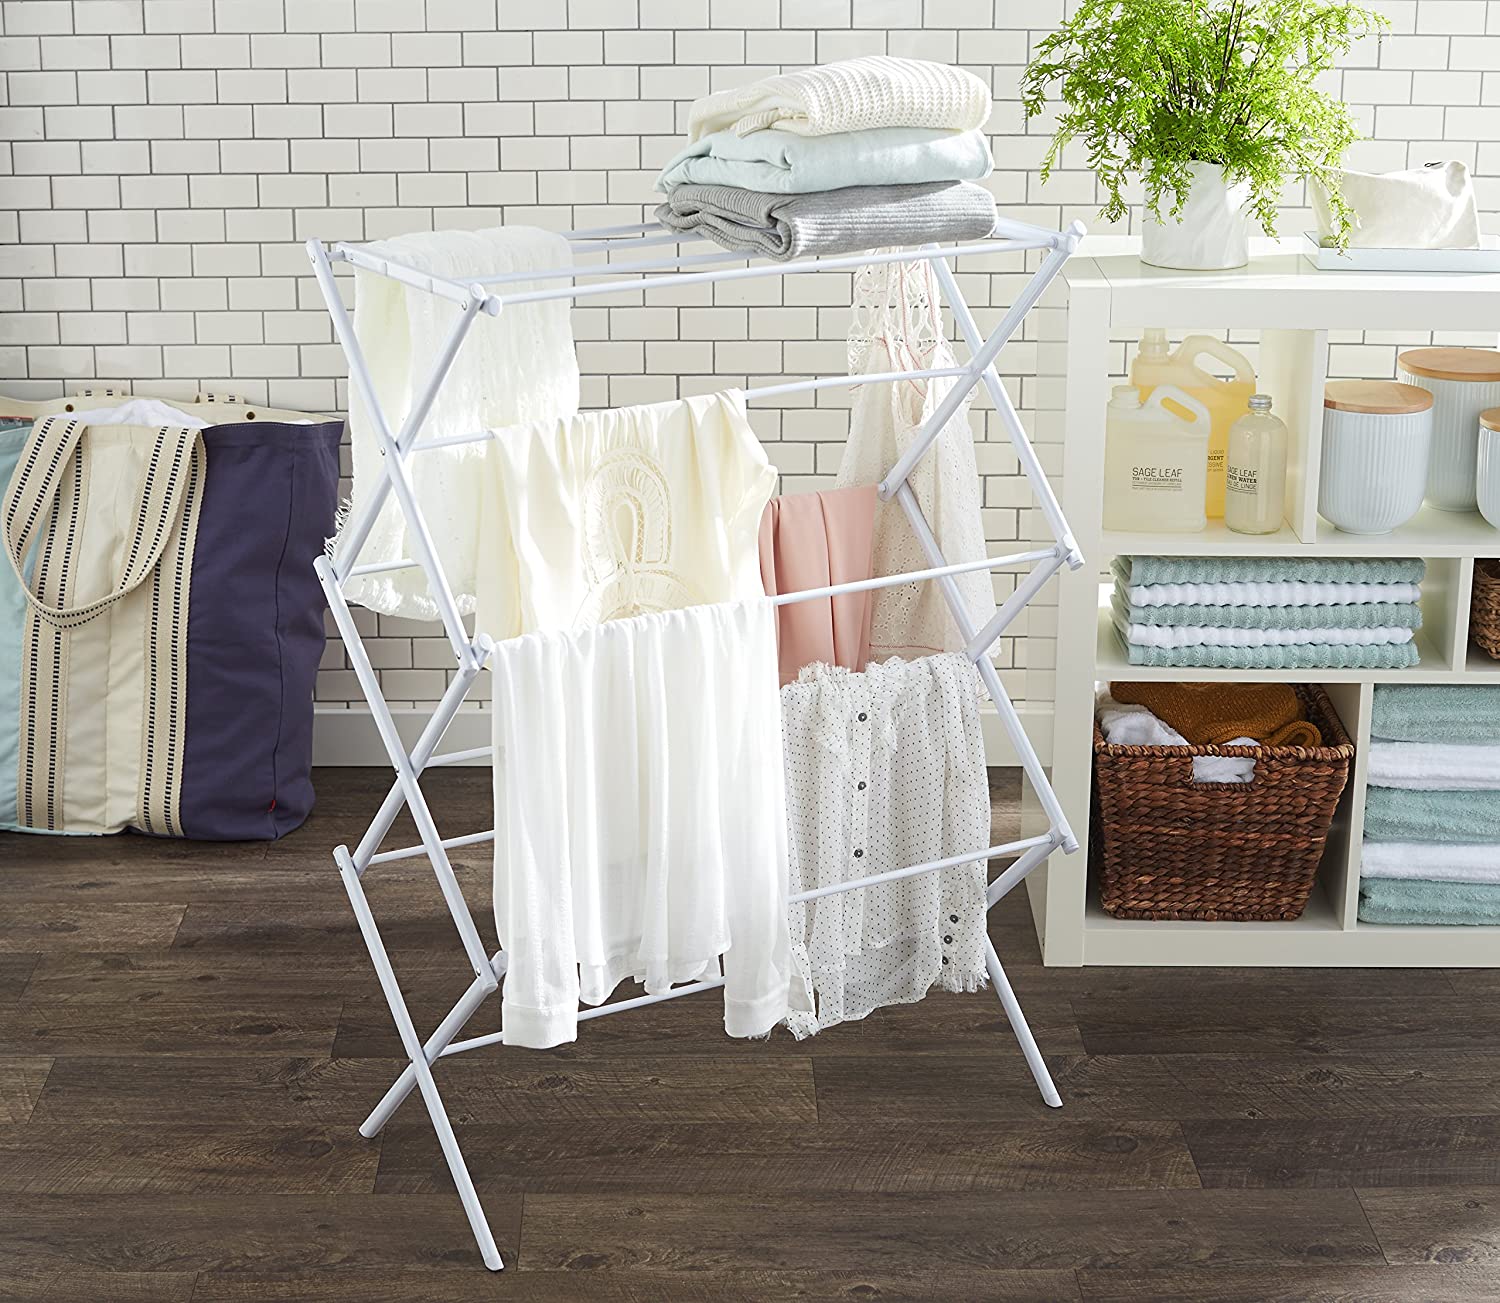 Compact, white drying rack